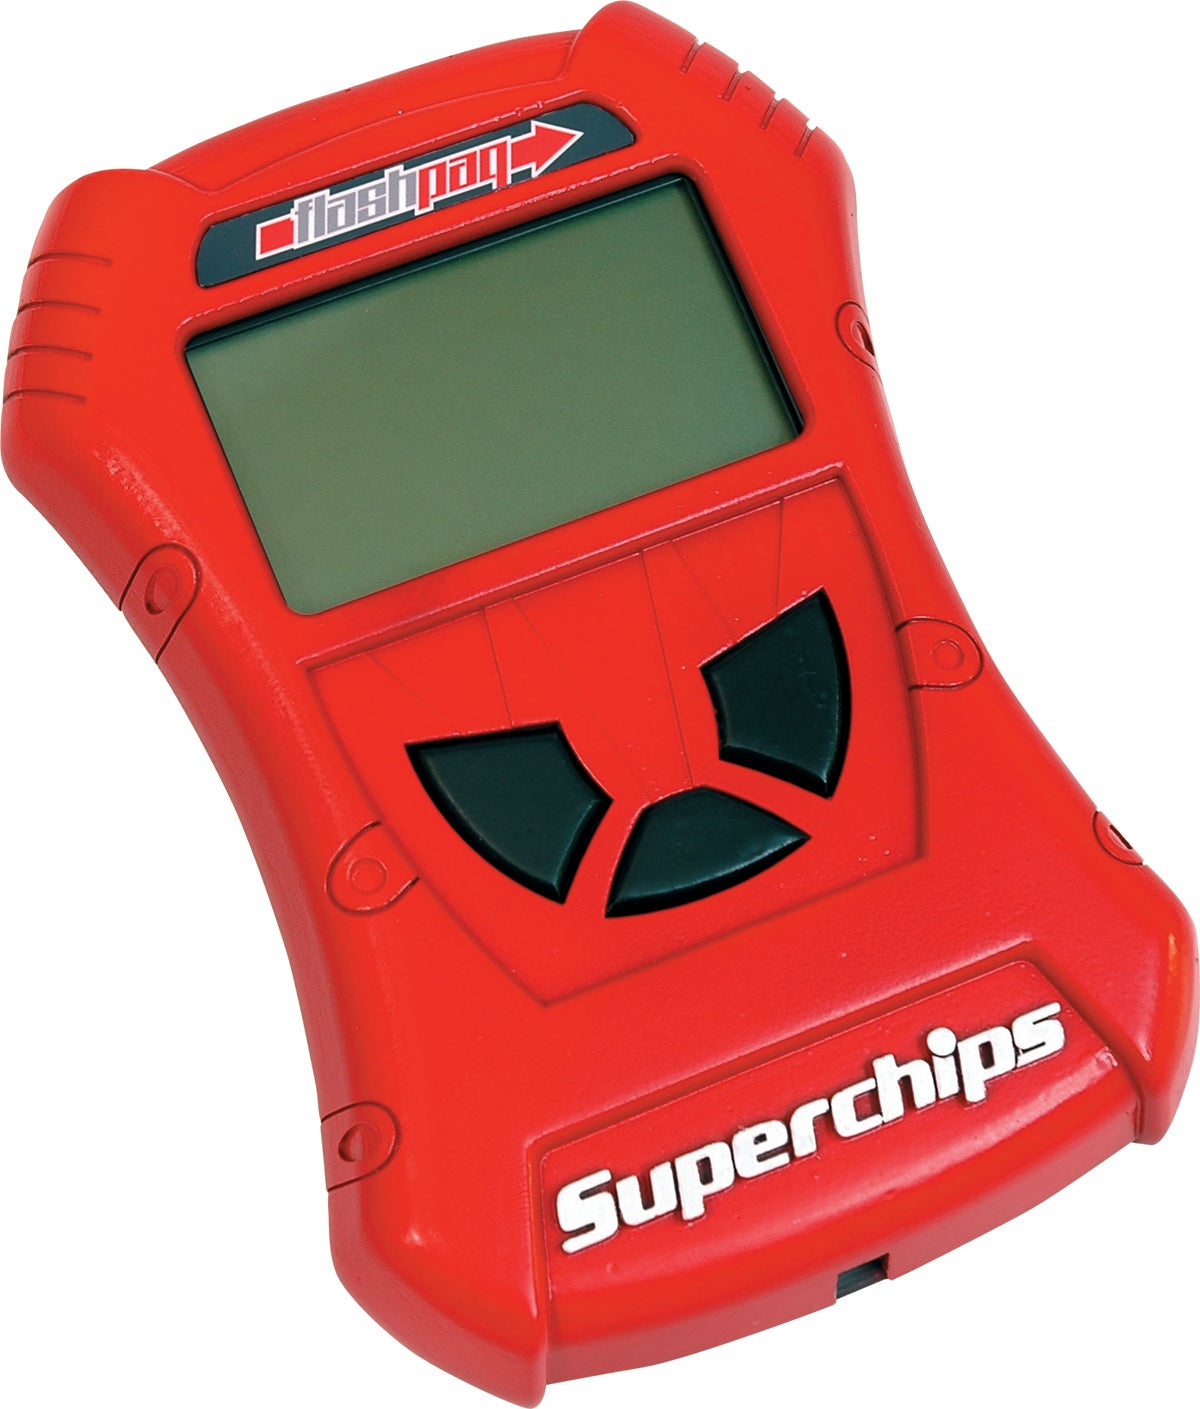 superchips f5 flashpaq update